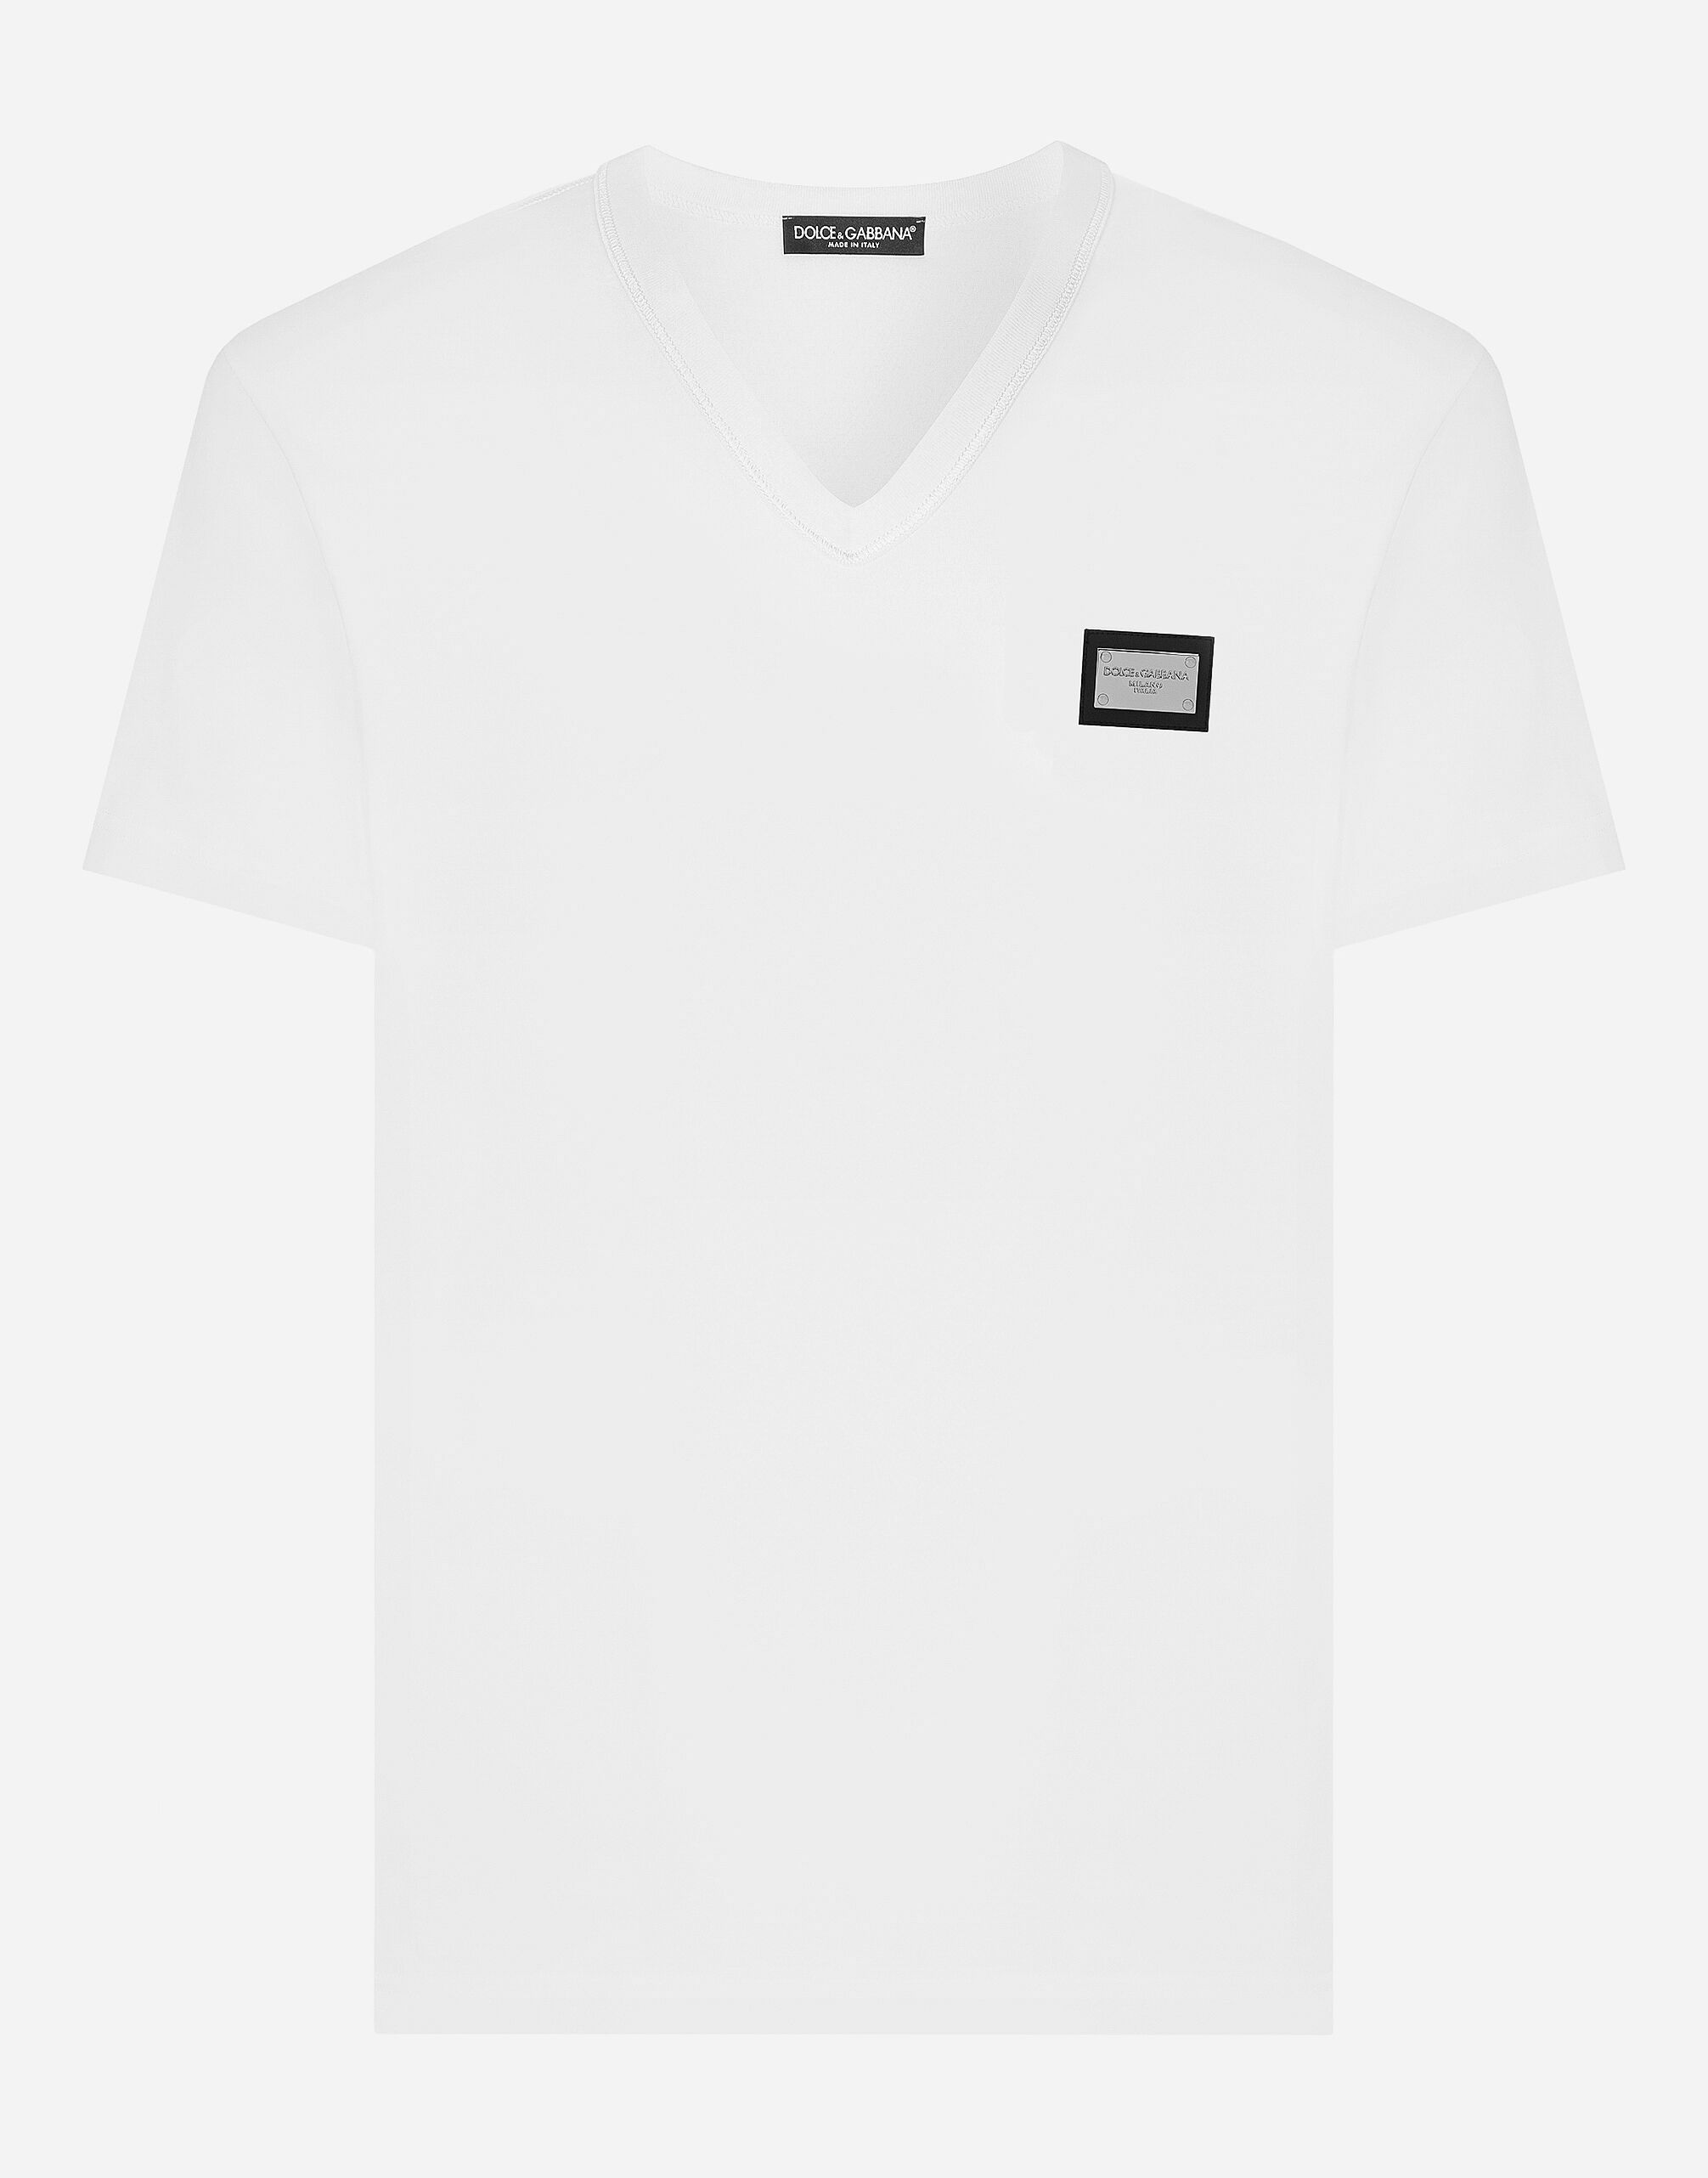 Dolce & Gabbana Cotton V-neck T-shirt with branded tag Black VG4390VP187